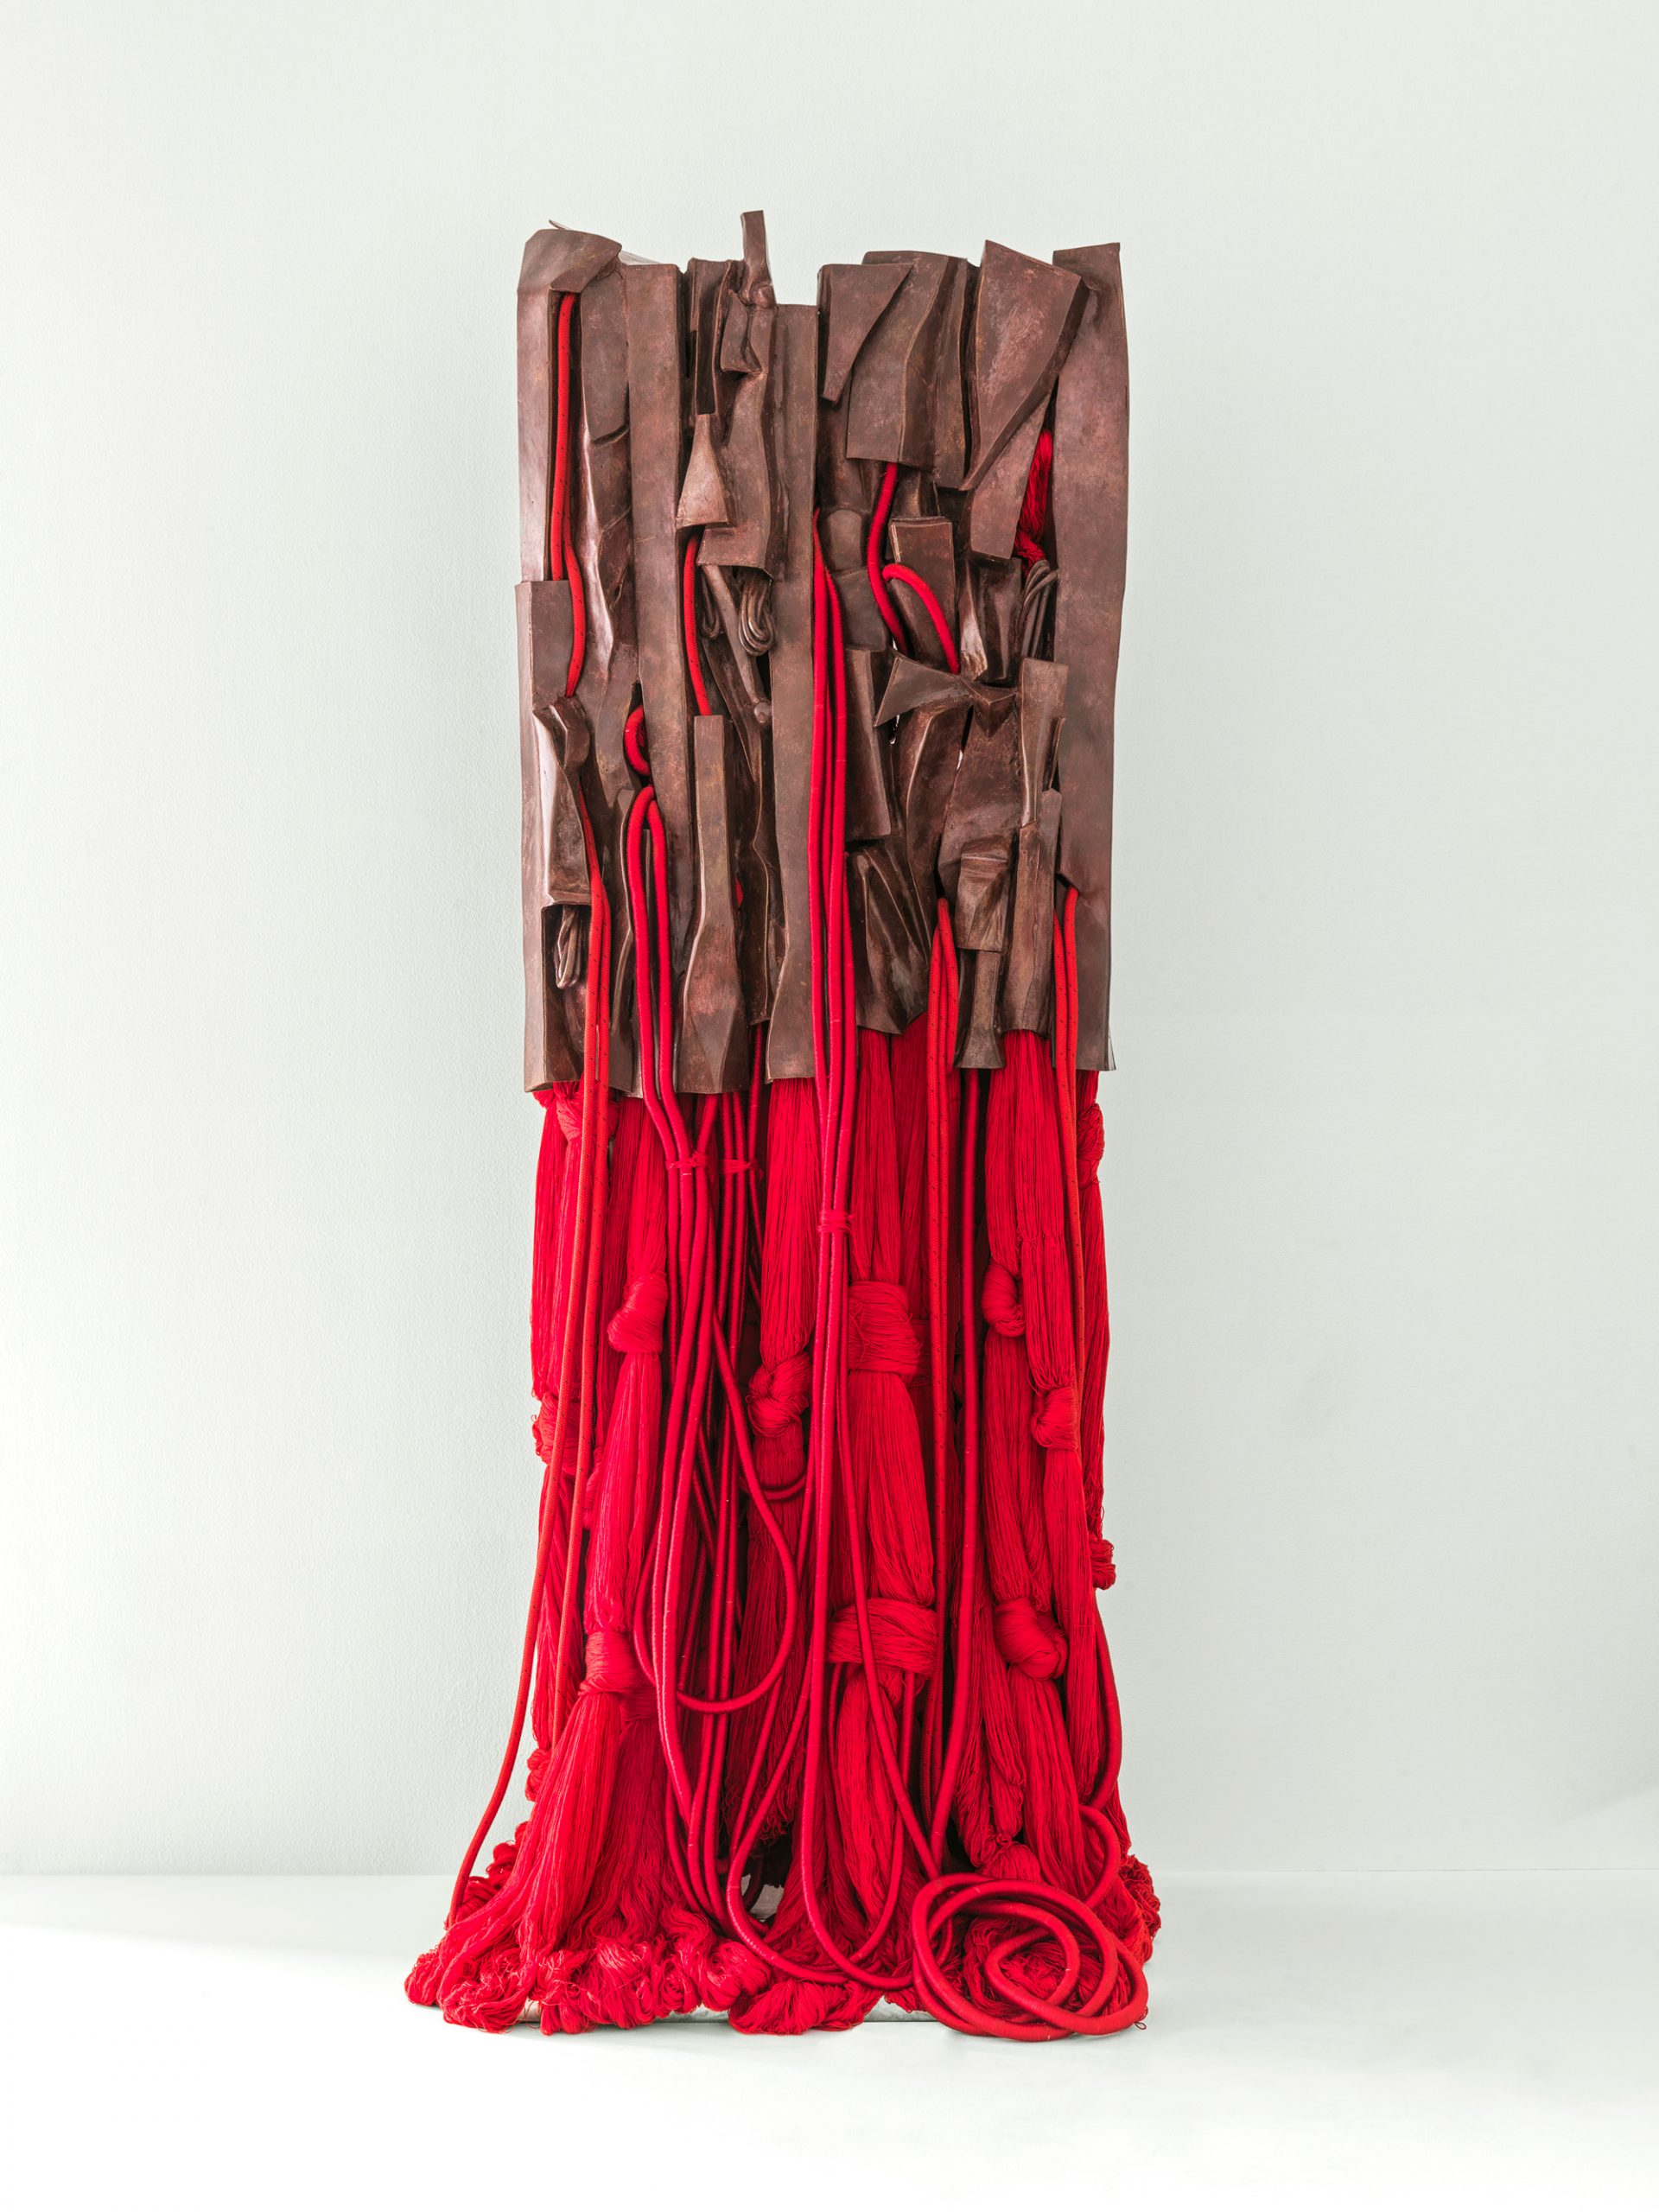 Barbara Chase-Riboud: Carving Routes Toward Liberation - Sculpture